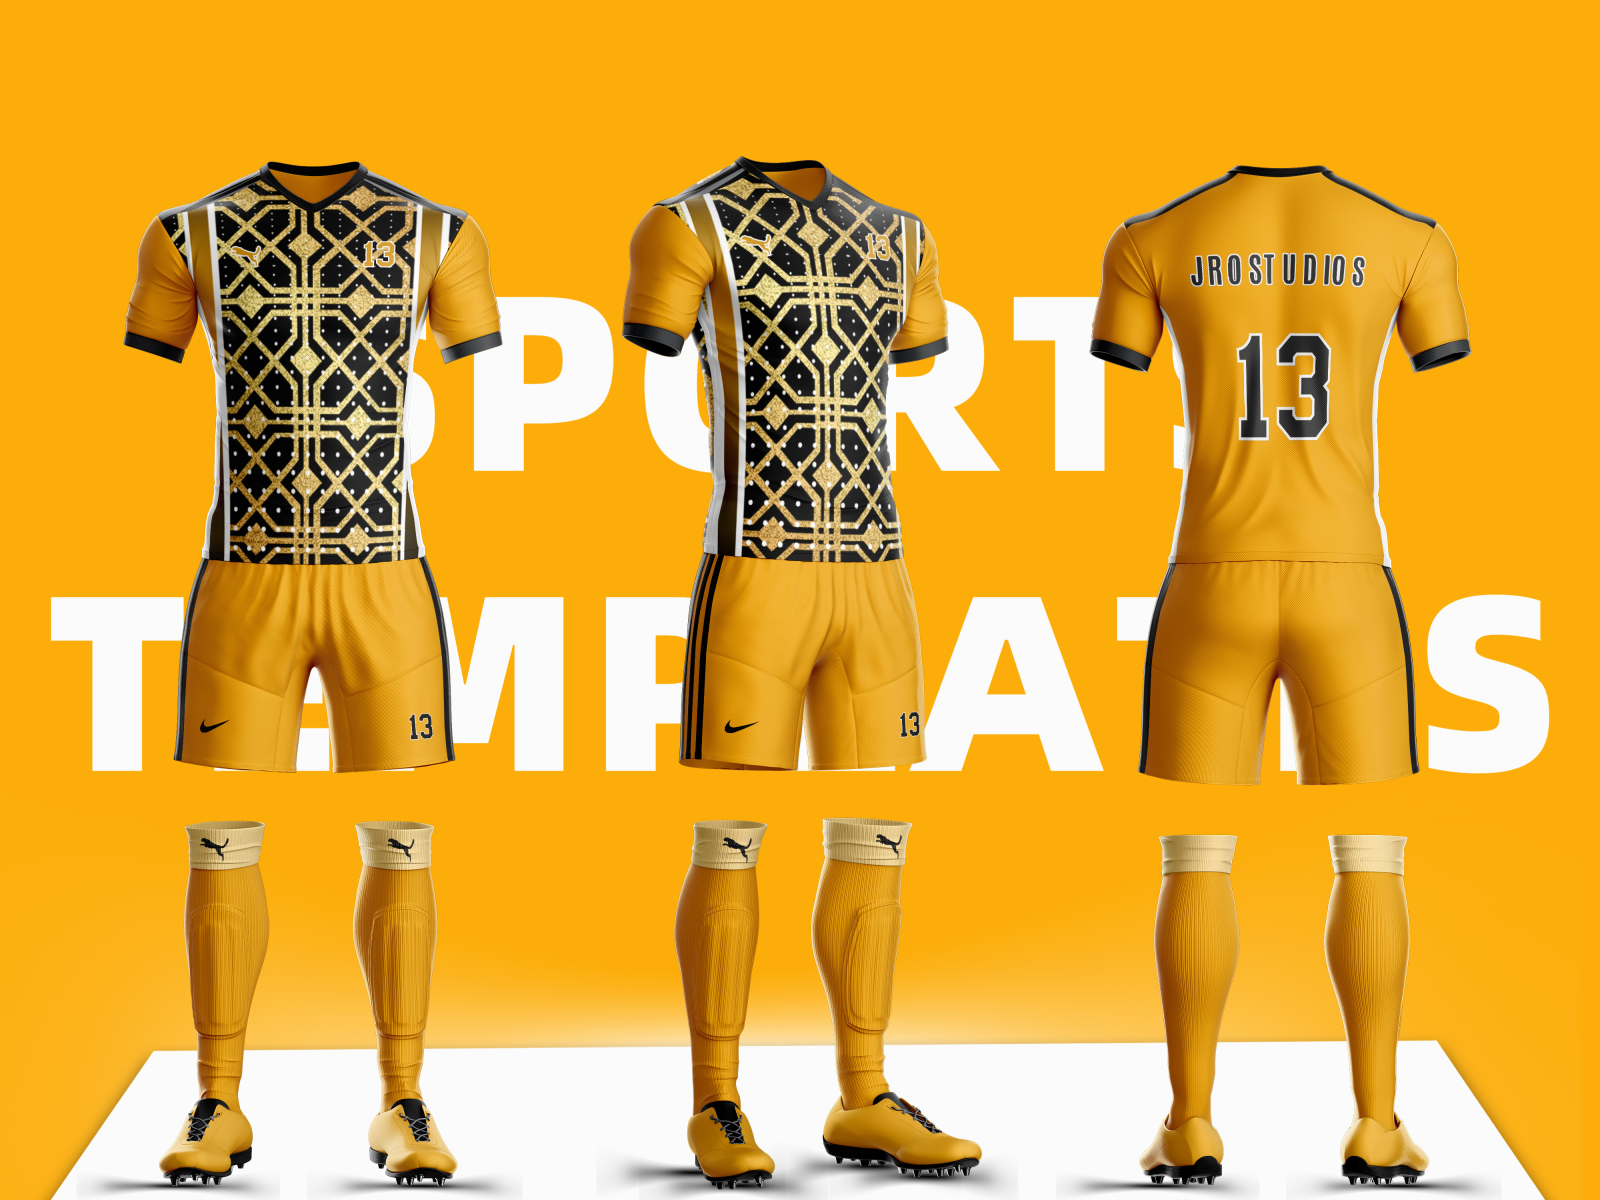 Orlando Magic NBA Uniform Design by Jro Studios on Dribbble